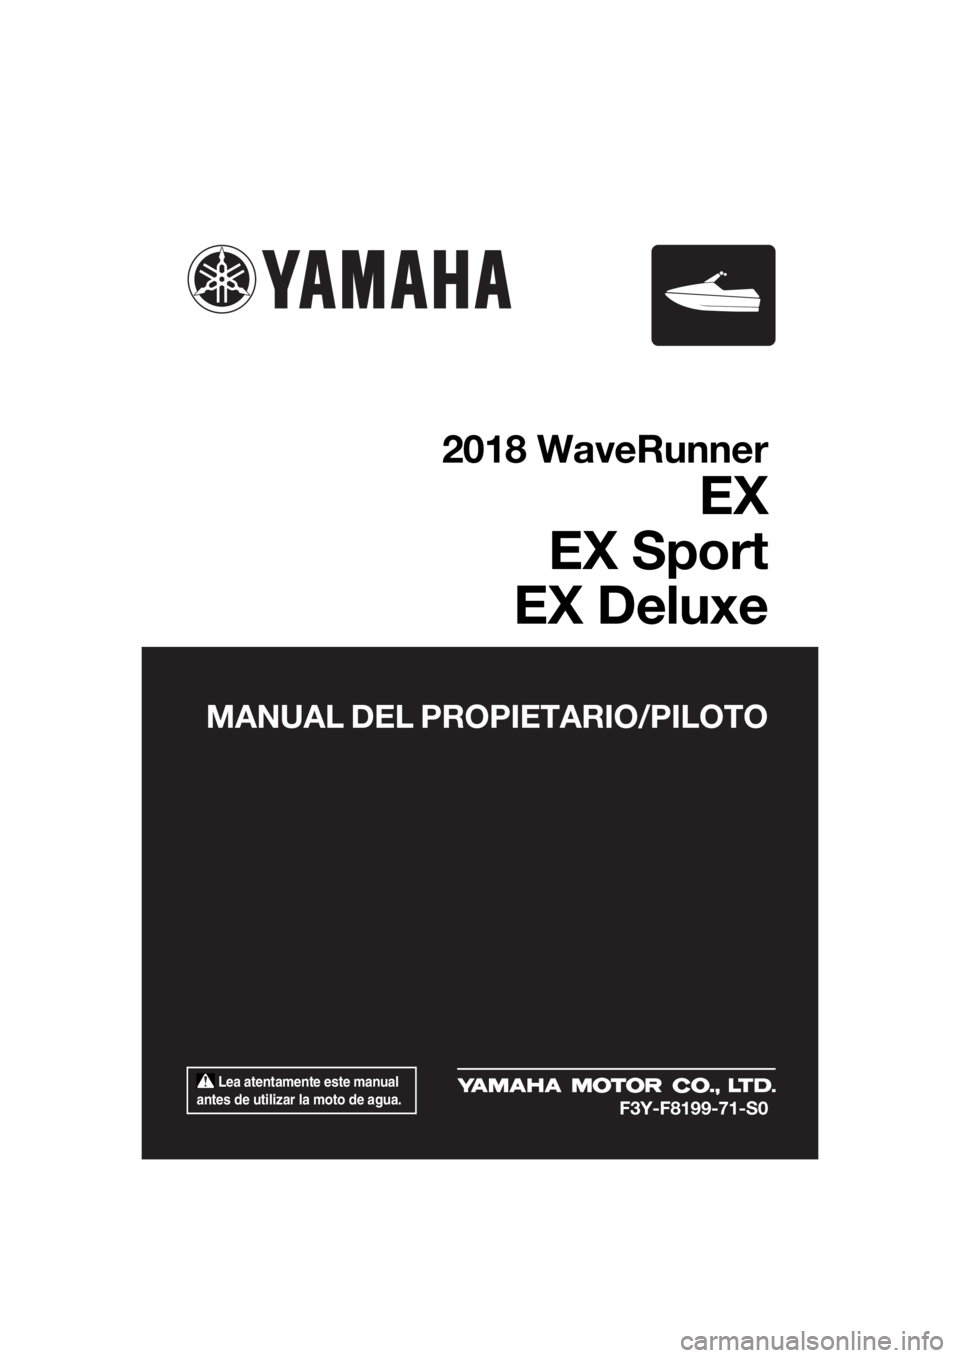 YAMAHA EX 2018  Manuale de Empleo (in Spanish) 